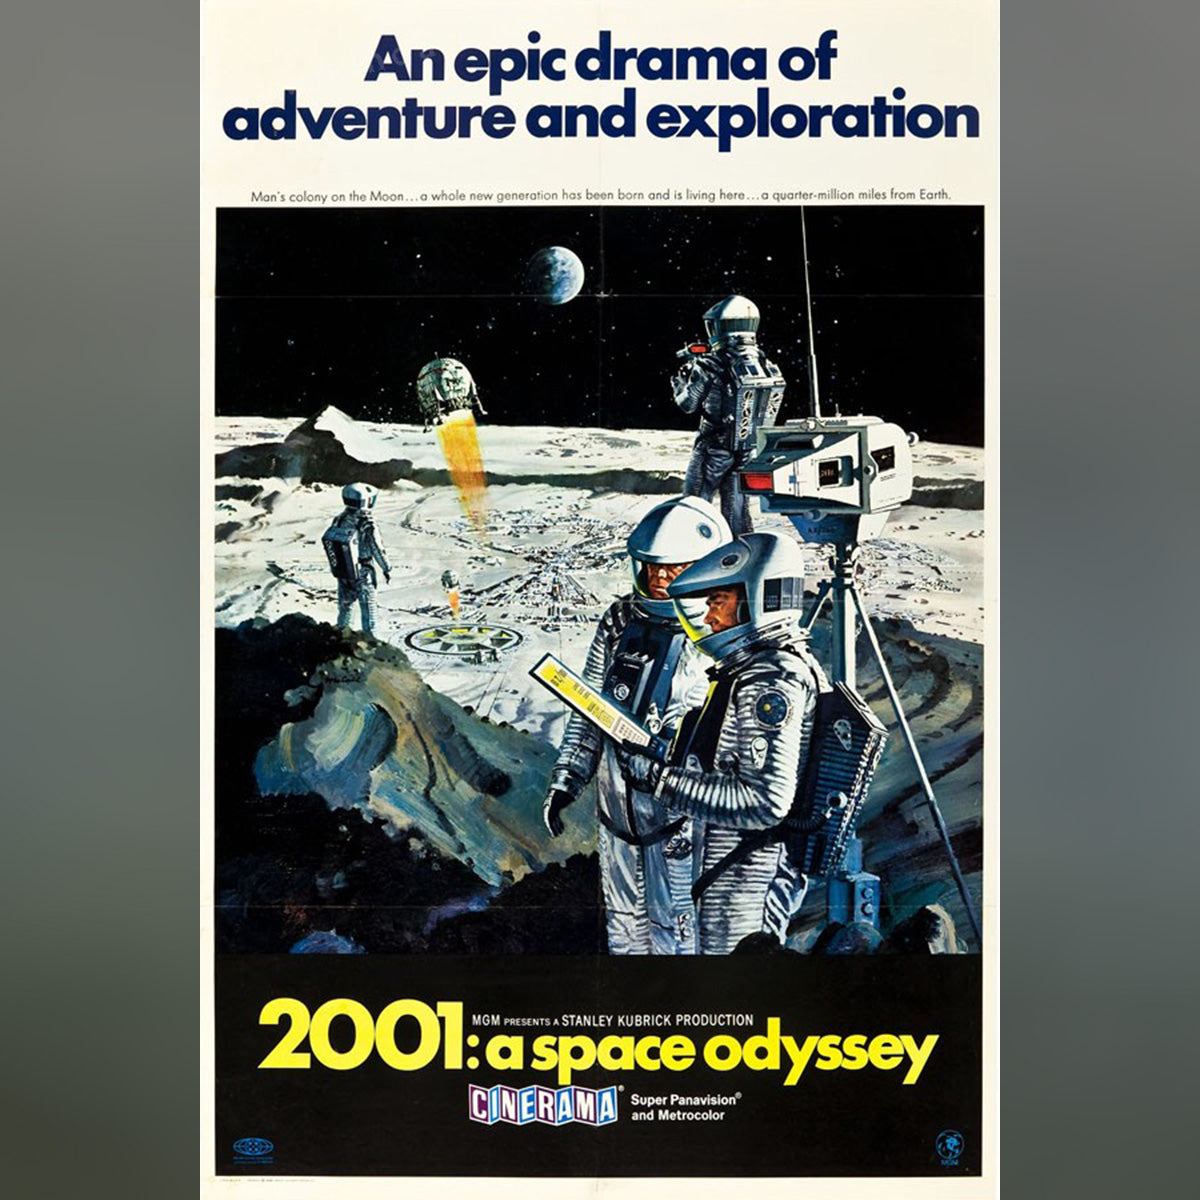 Original Movie Poster of 2001: A Space Odyssey (1968)